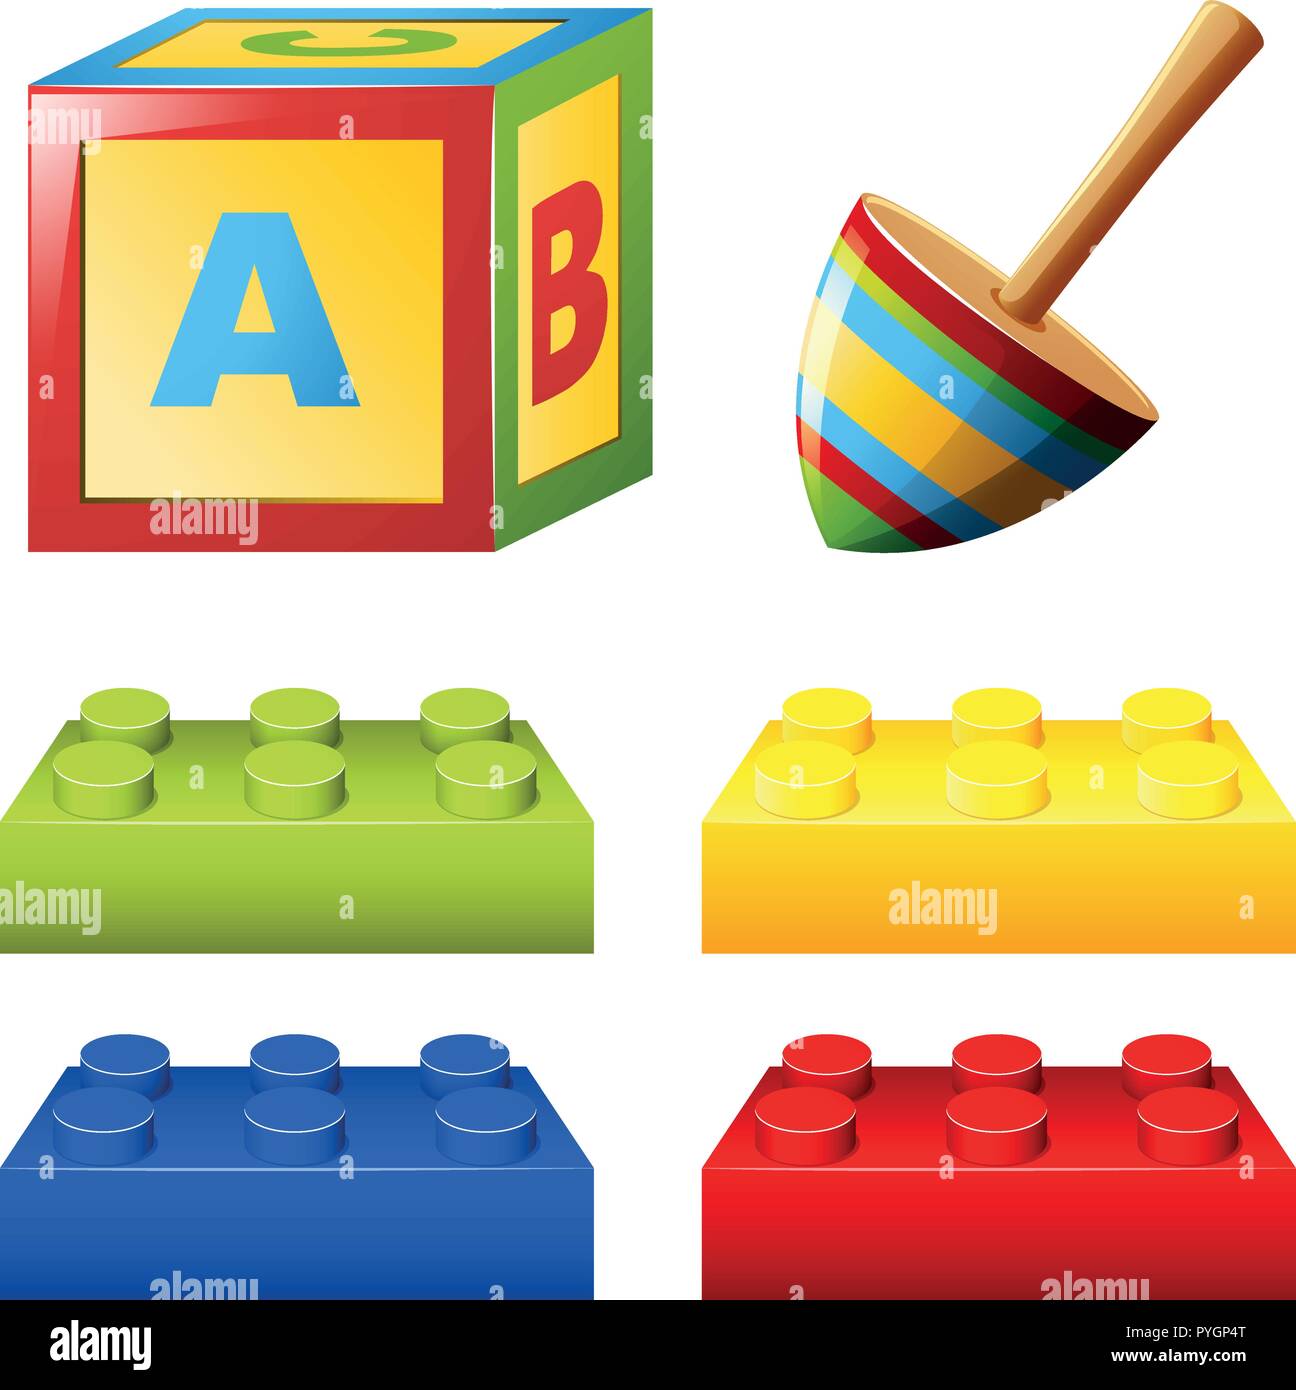 Alphabet block and colorful bricks illustration Stock Vector